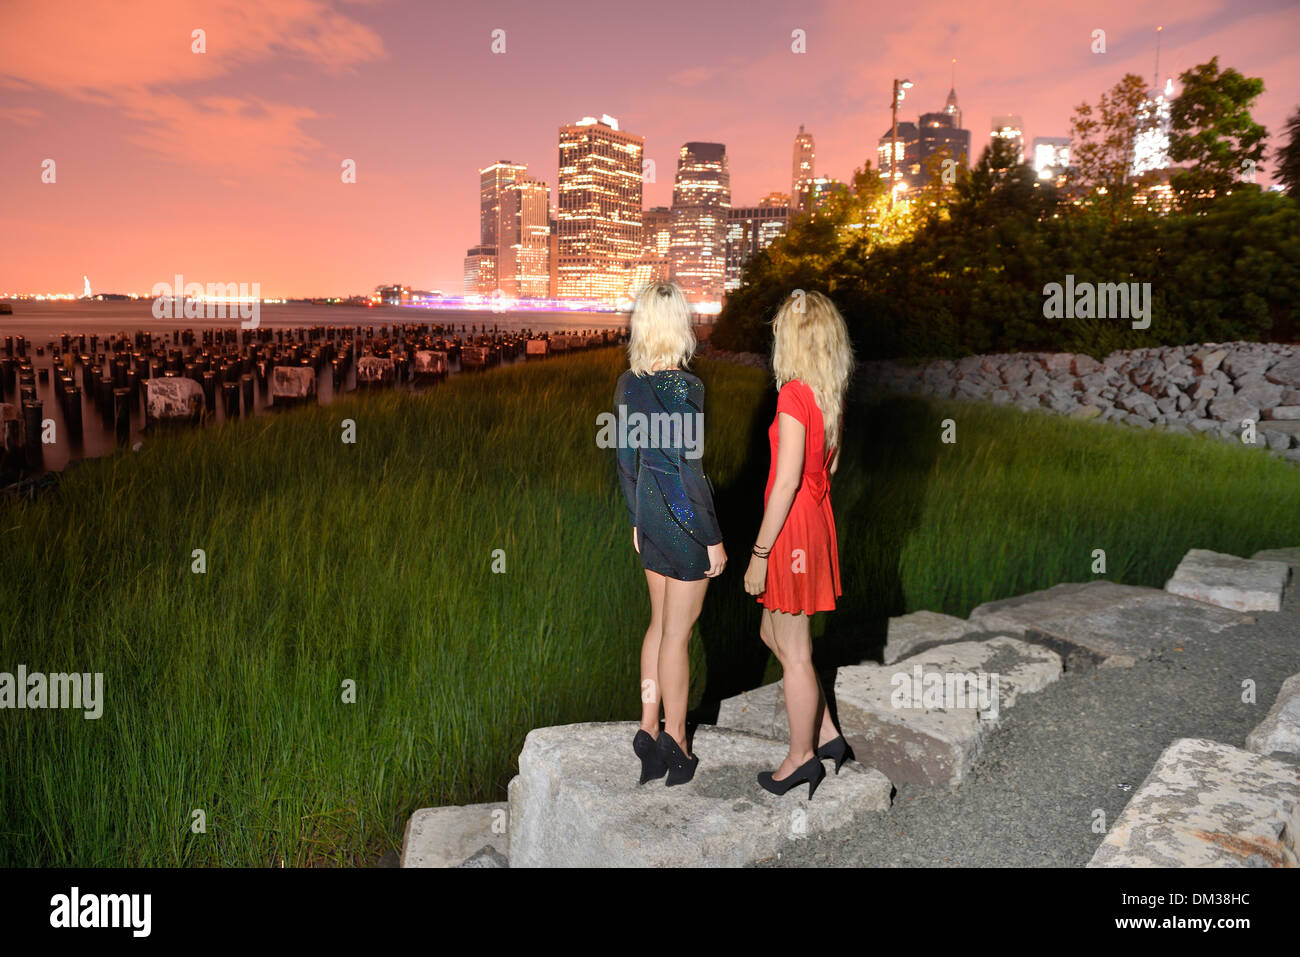 America United States USA côte est New York Brooklyn Park East River nightlife gens rouge talons blonde robe skyline Banque D'Images